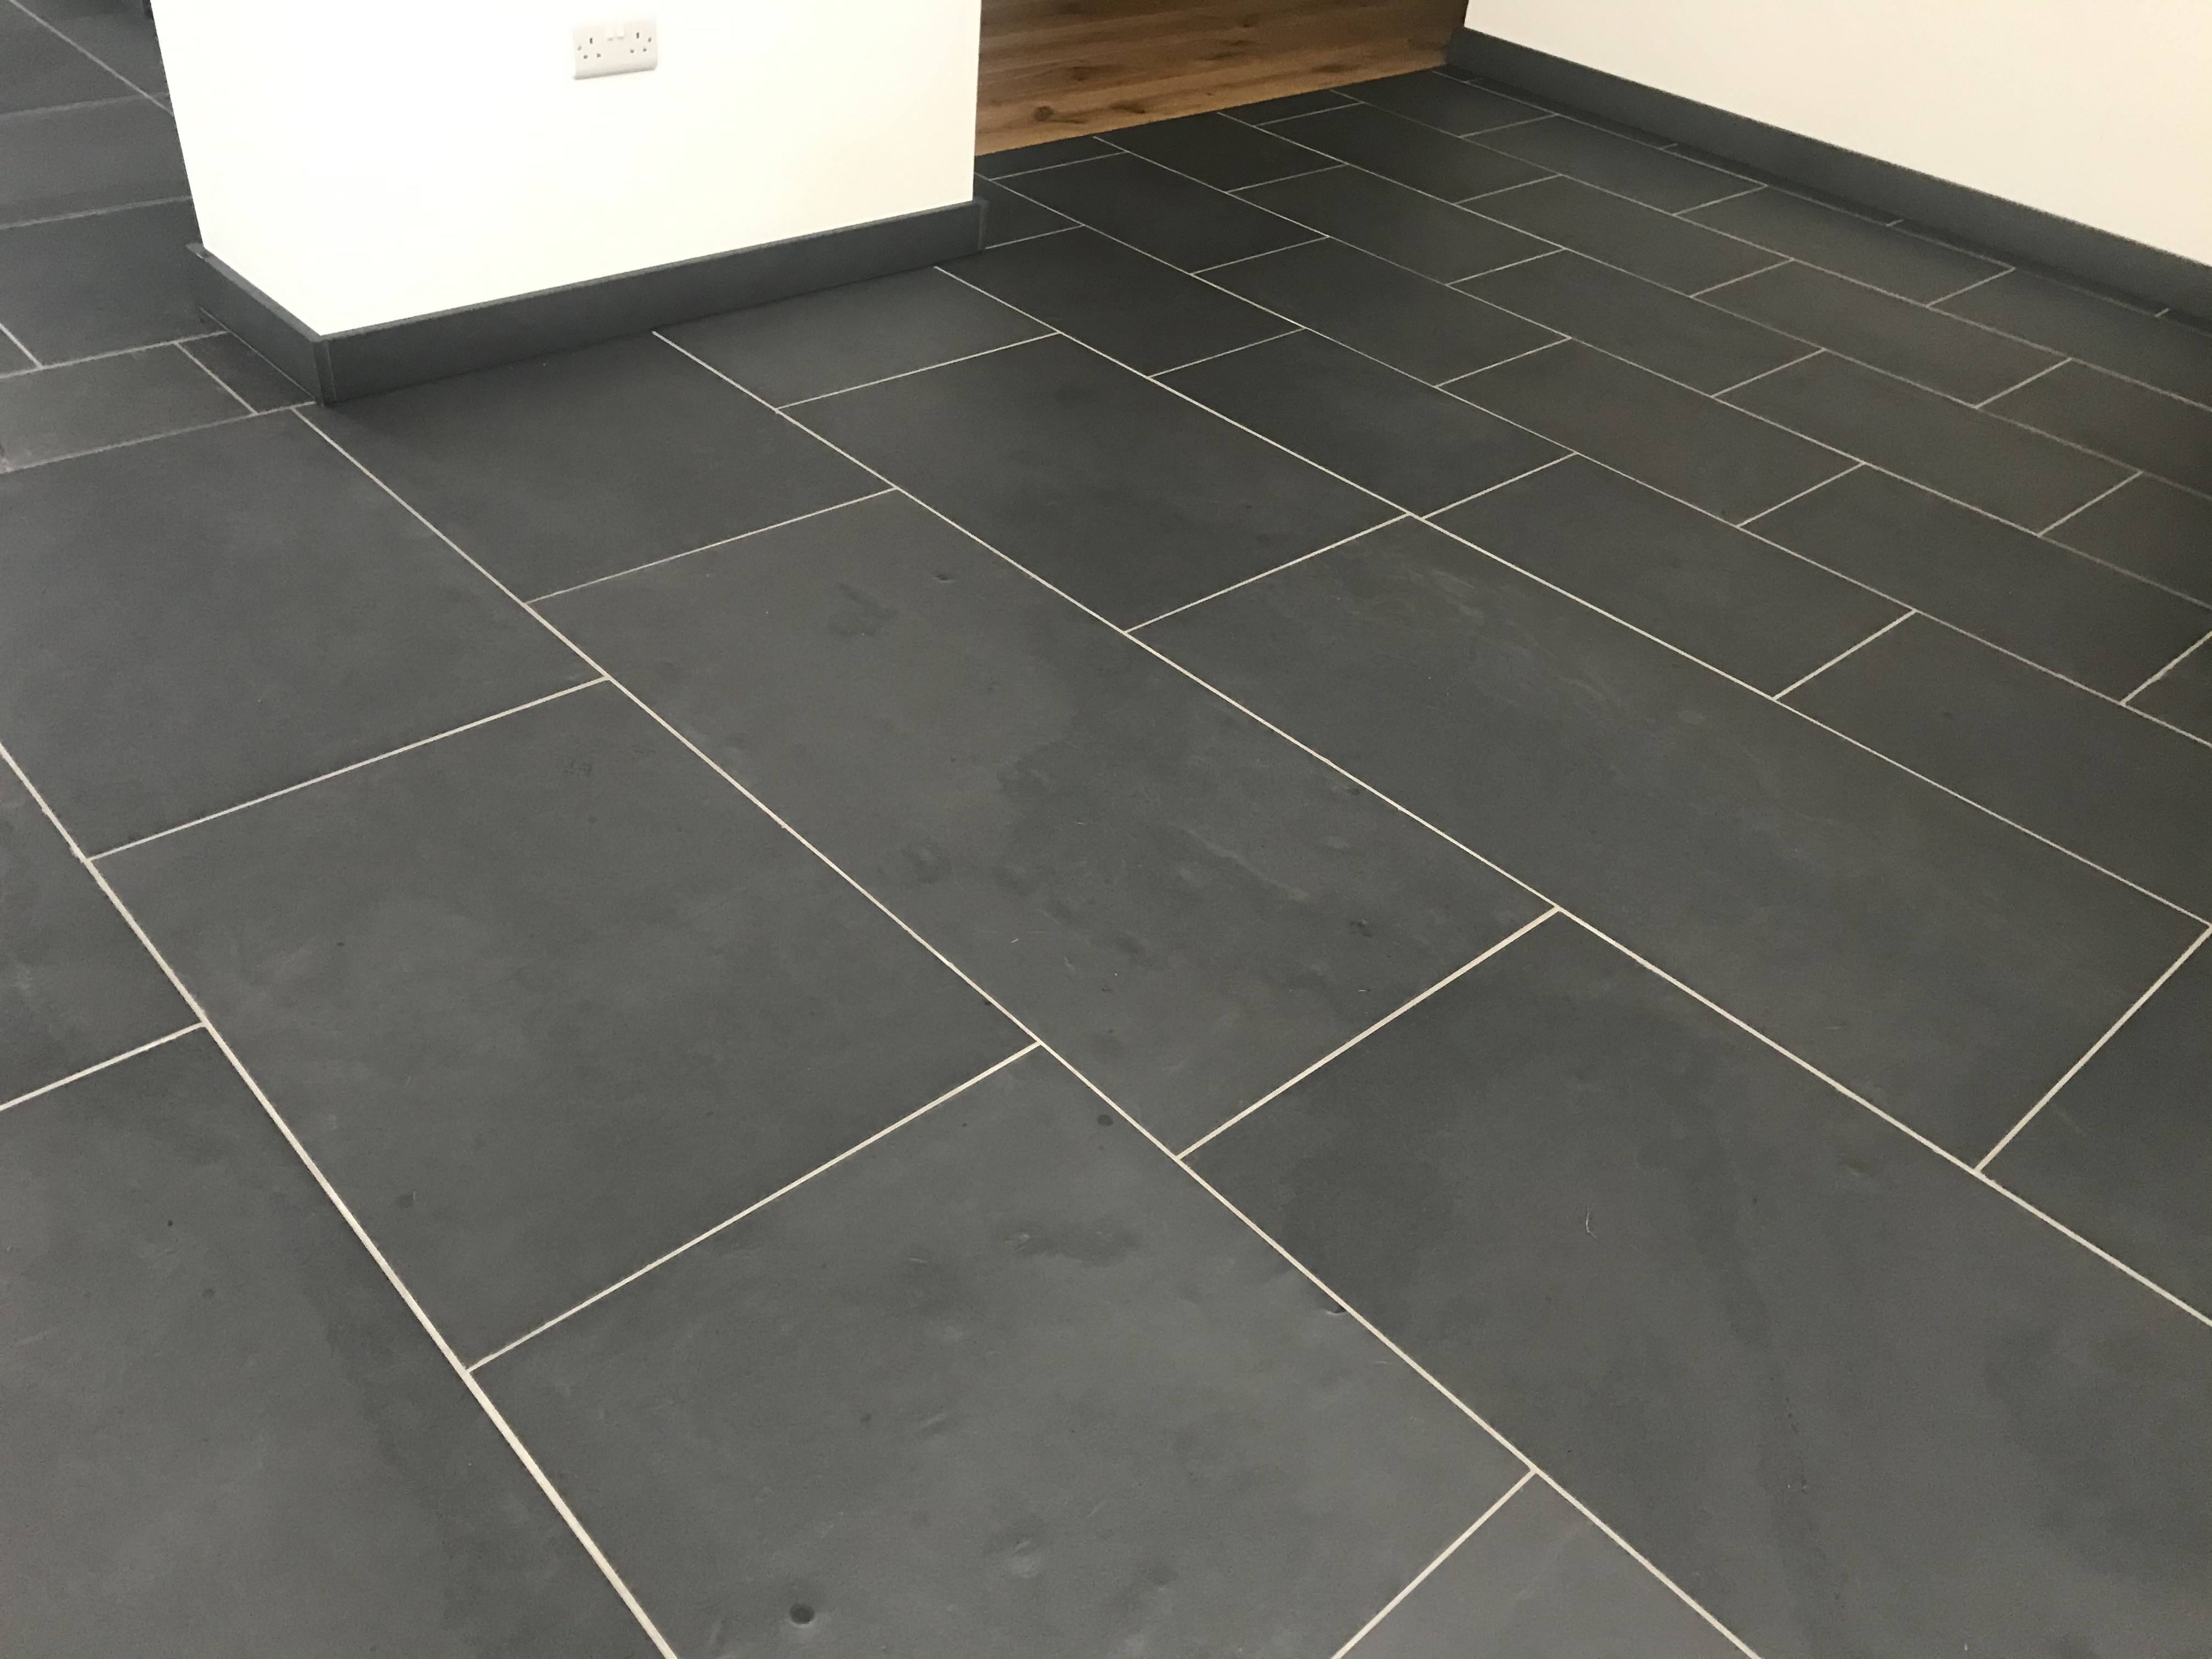 Welsh Slate Floor Tiles Berwyn, Slate Flooring Vs Ceramic Tile Bathroom Floor Tiles